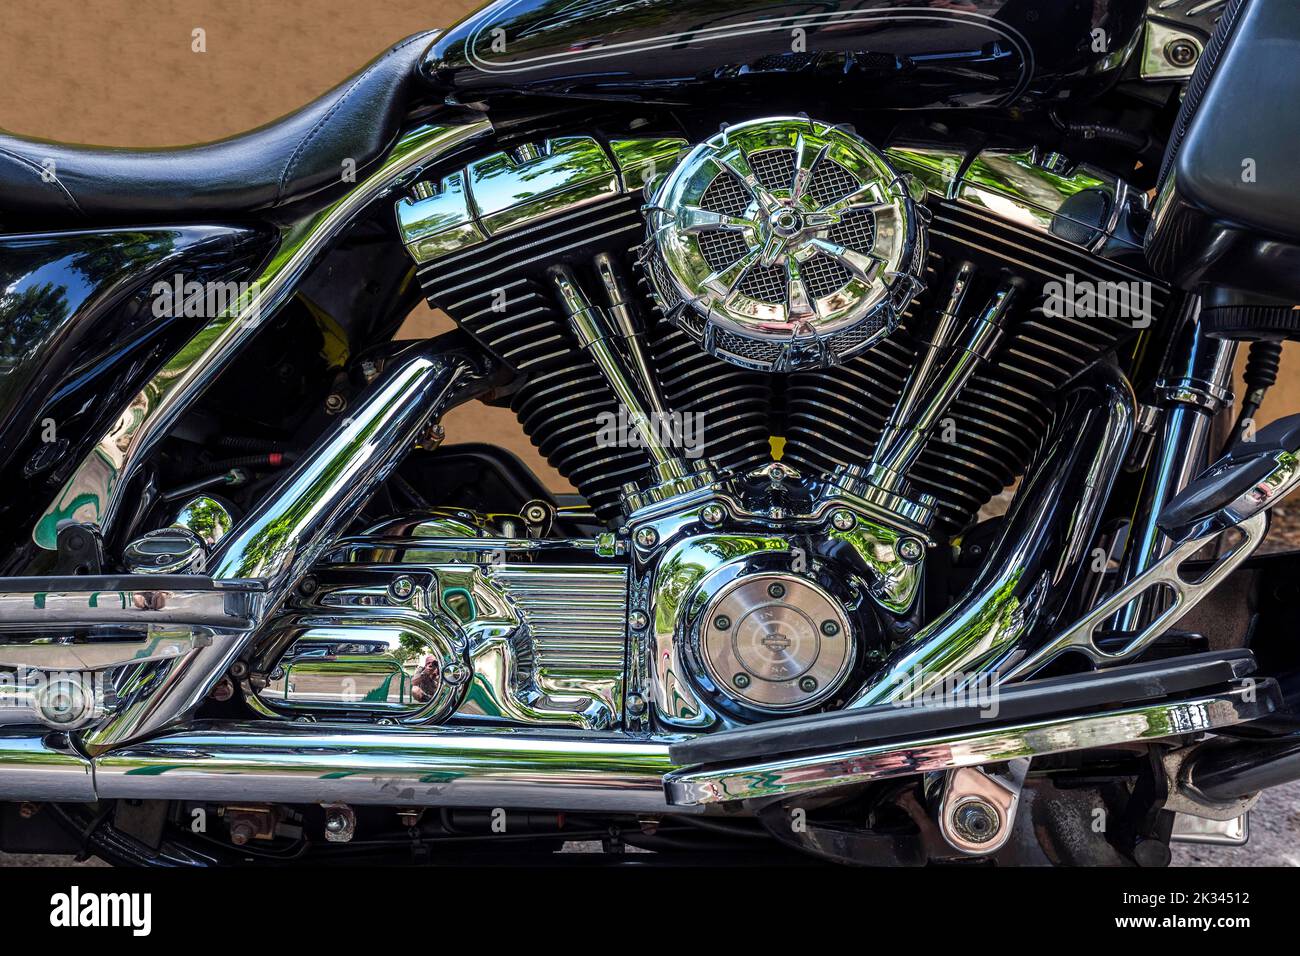 Motorrad, Harley Davidson Motor, Provence, Frankreich Stockfoto